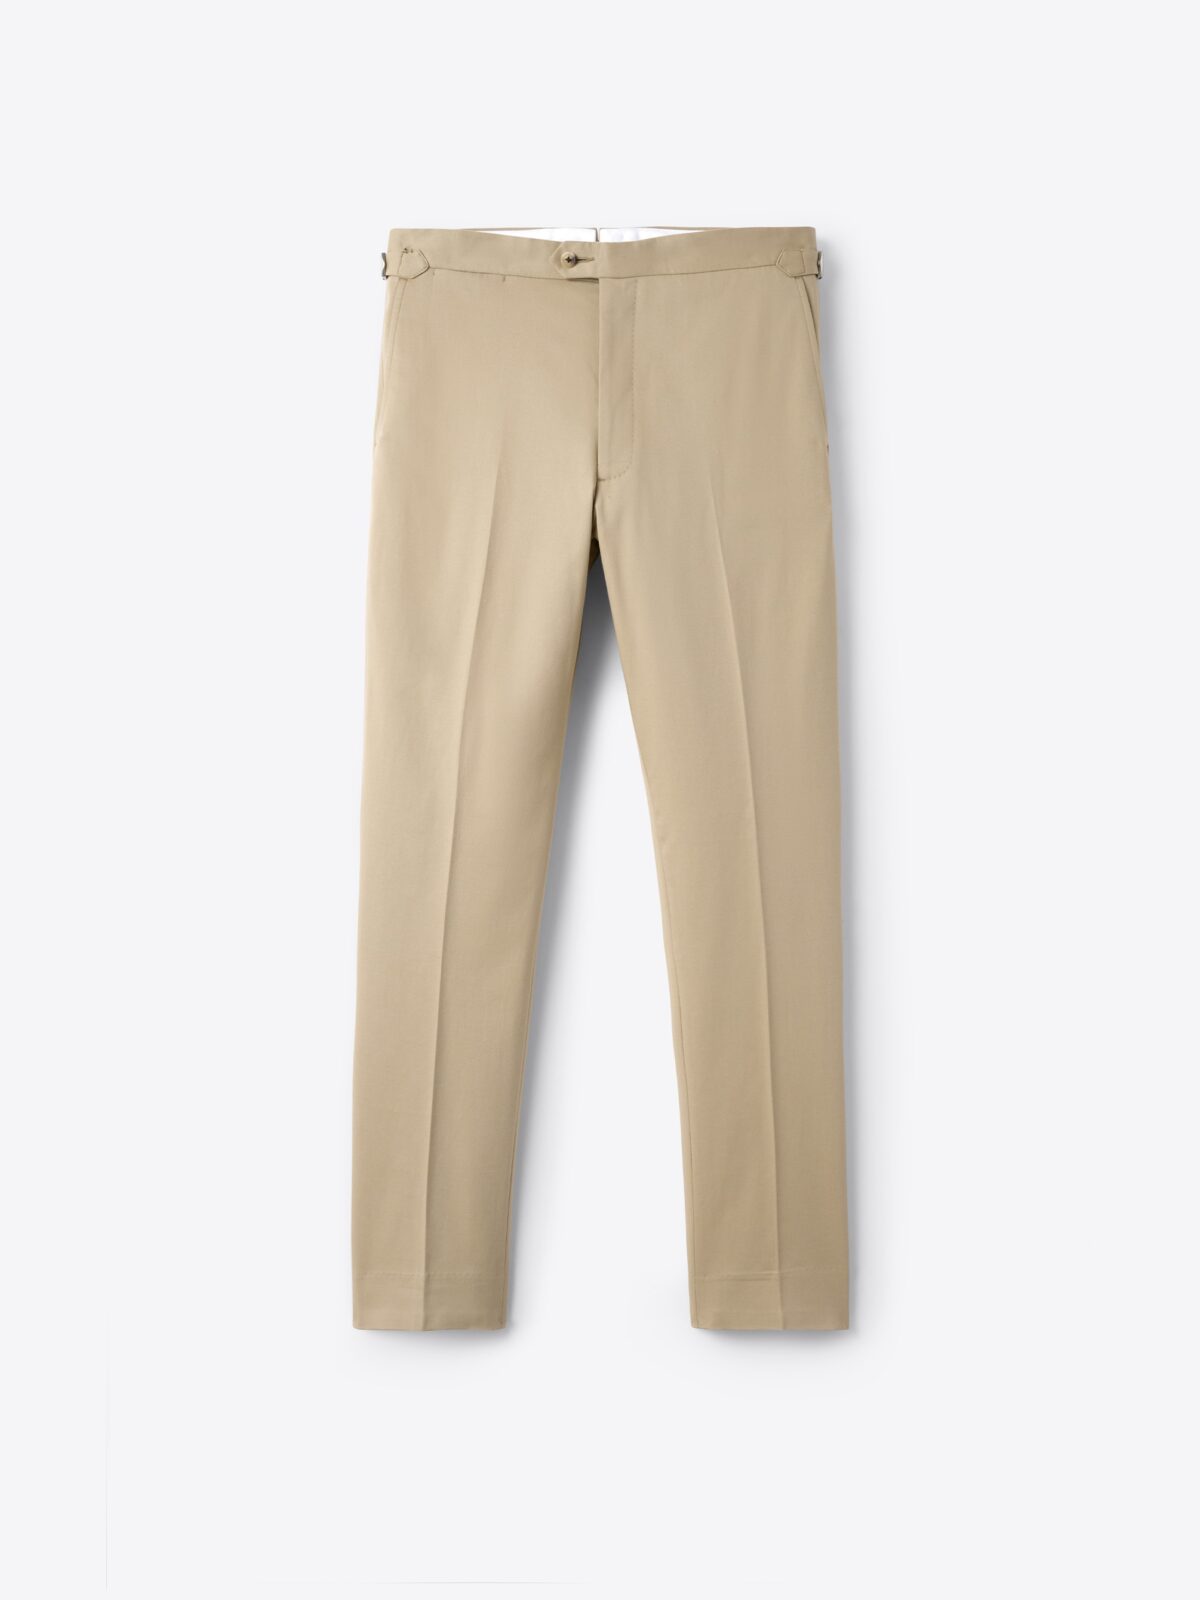 Versa Grey Washable Cotton Stretch Pant - Custom Fit Pants